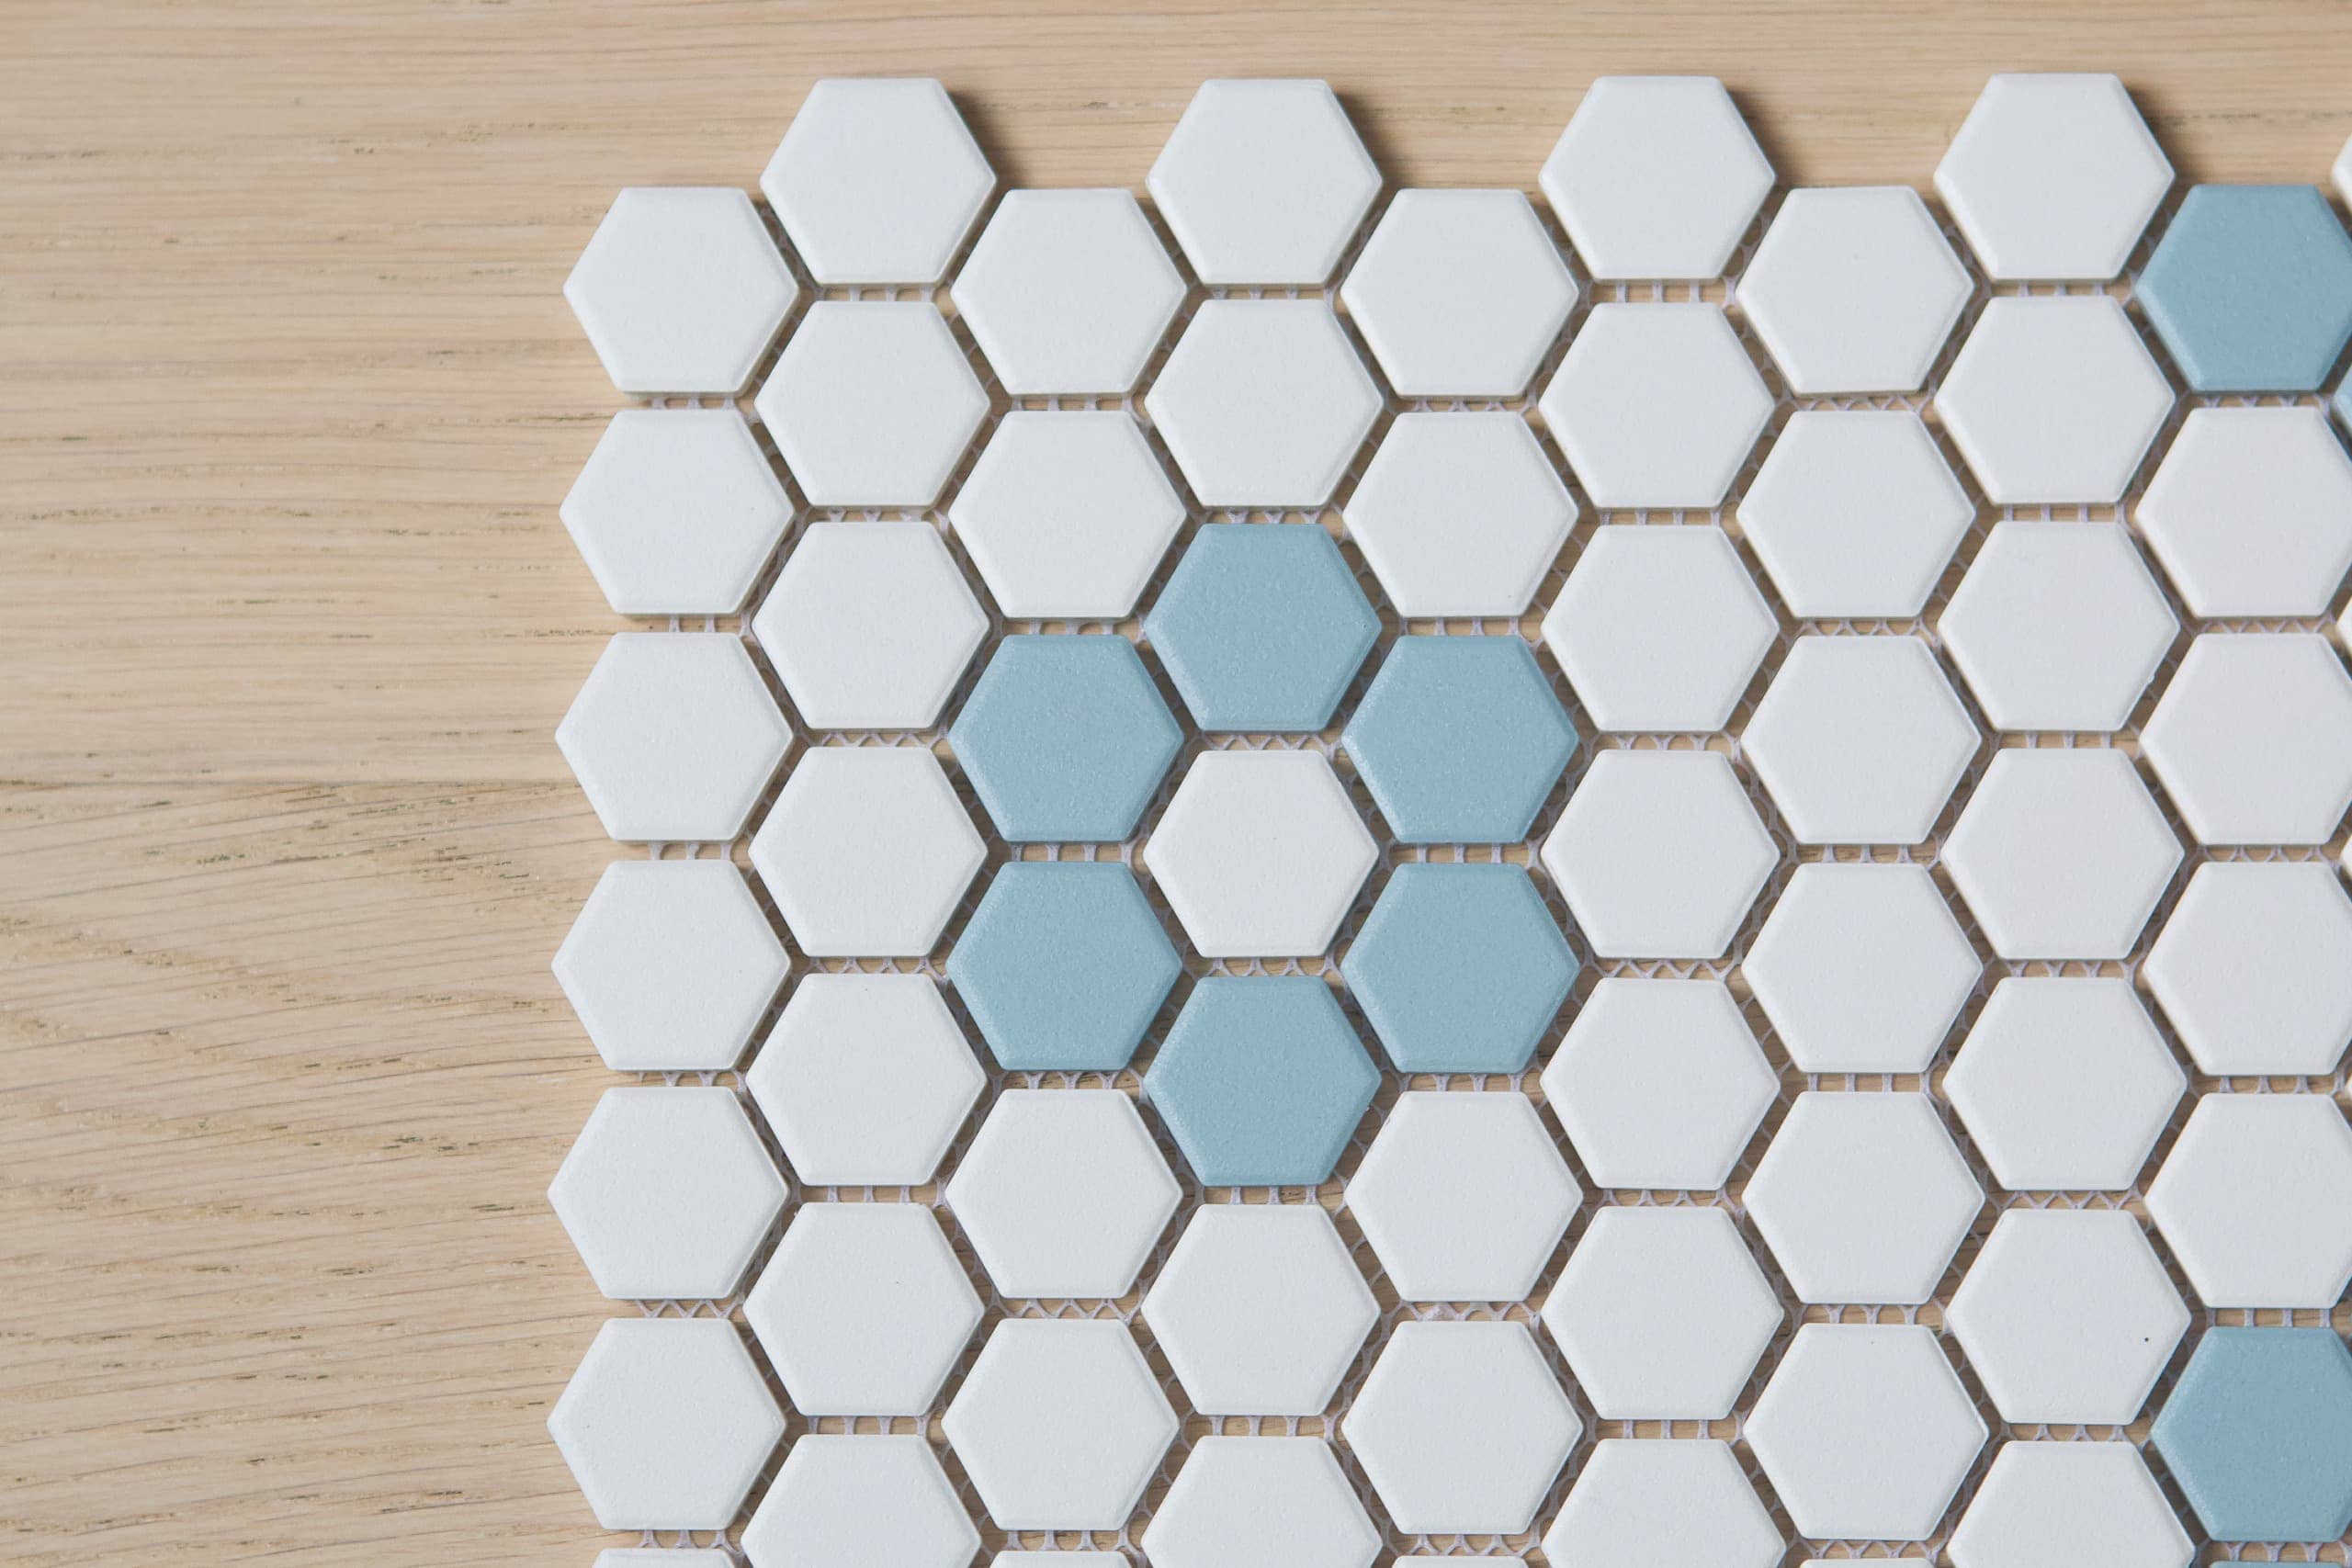 Hexagon tiles when choosing kids' bathroom tile